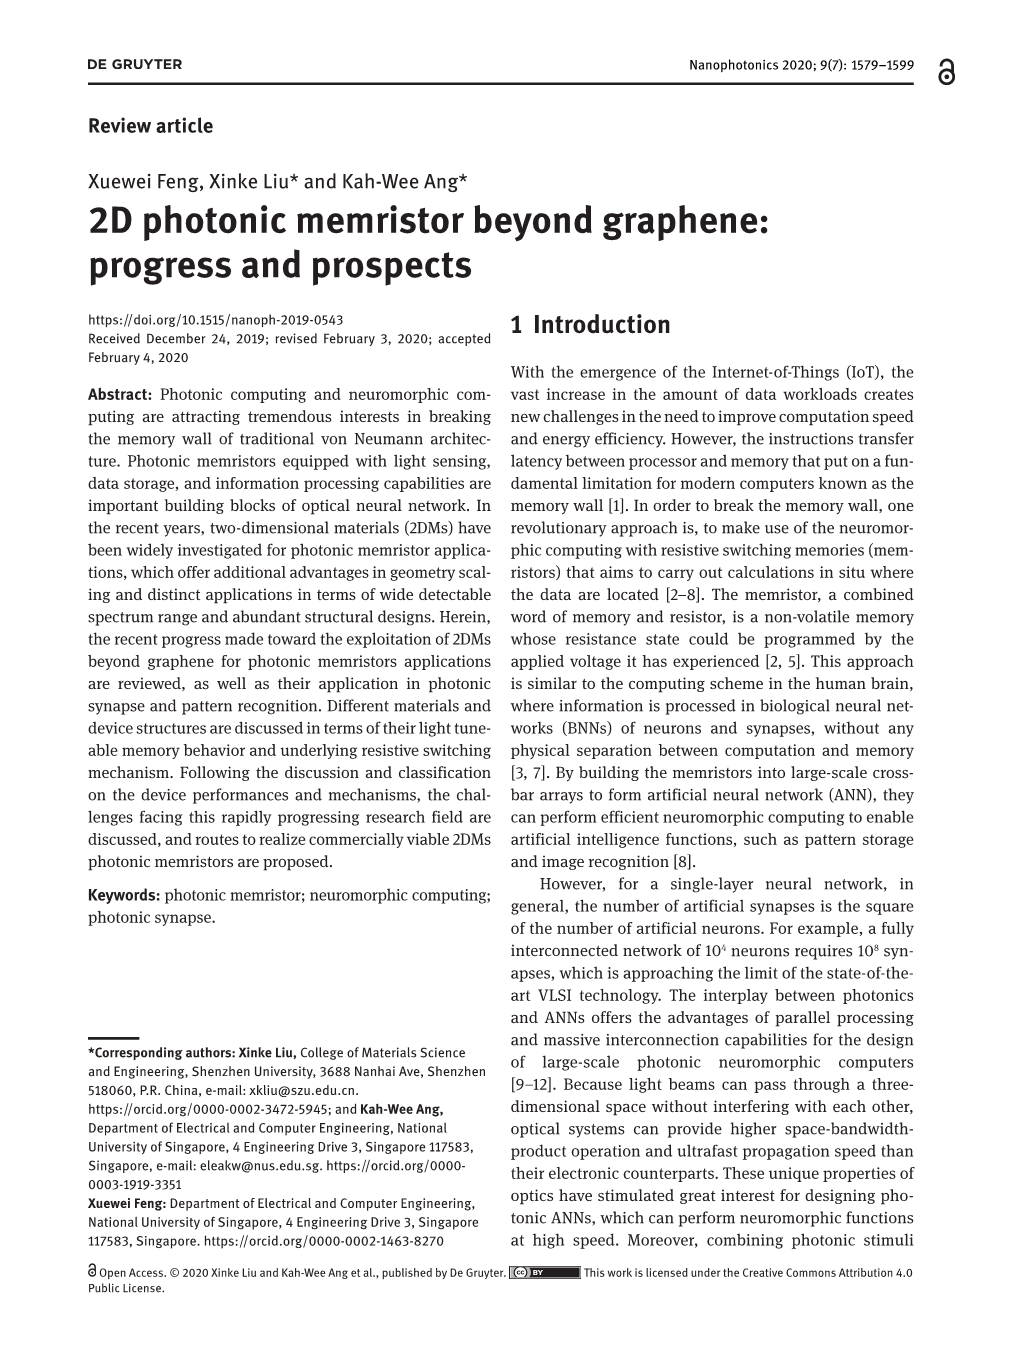 2D Photonic Memristor Beyond Graphene: Progress and Prospects